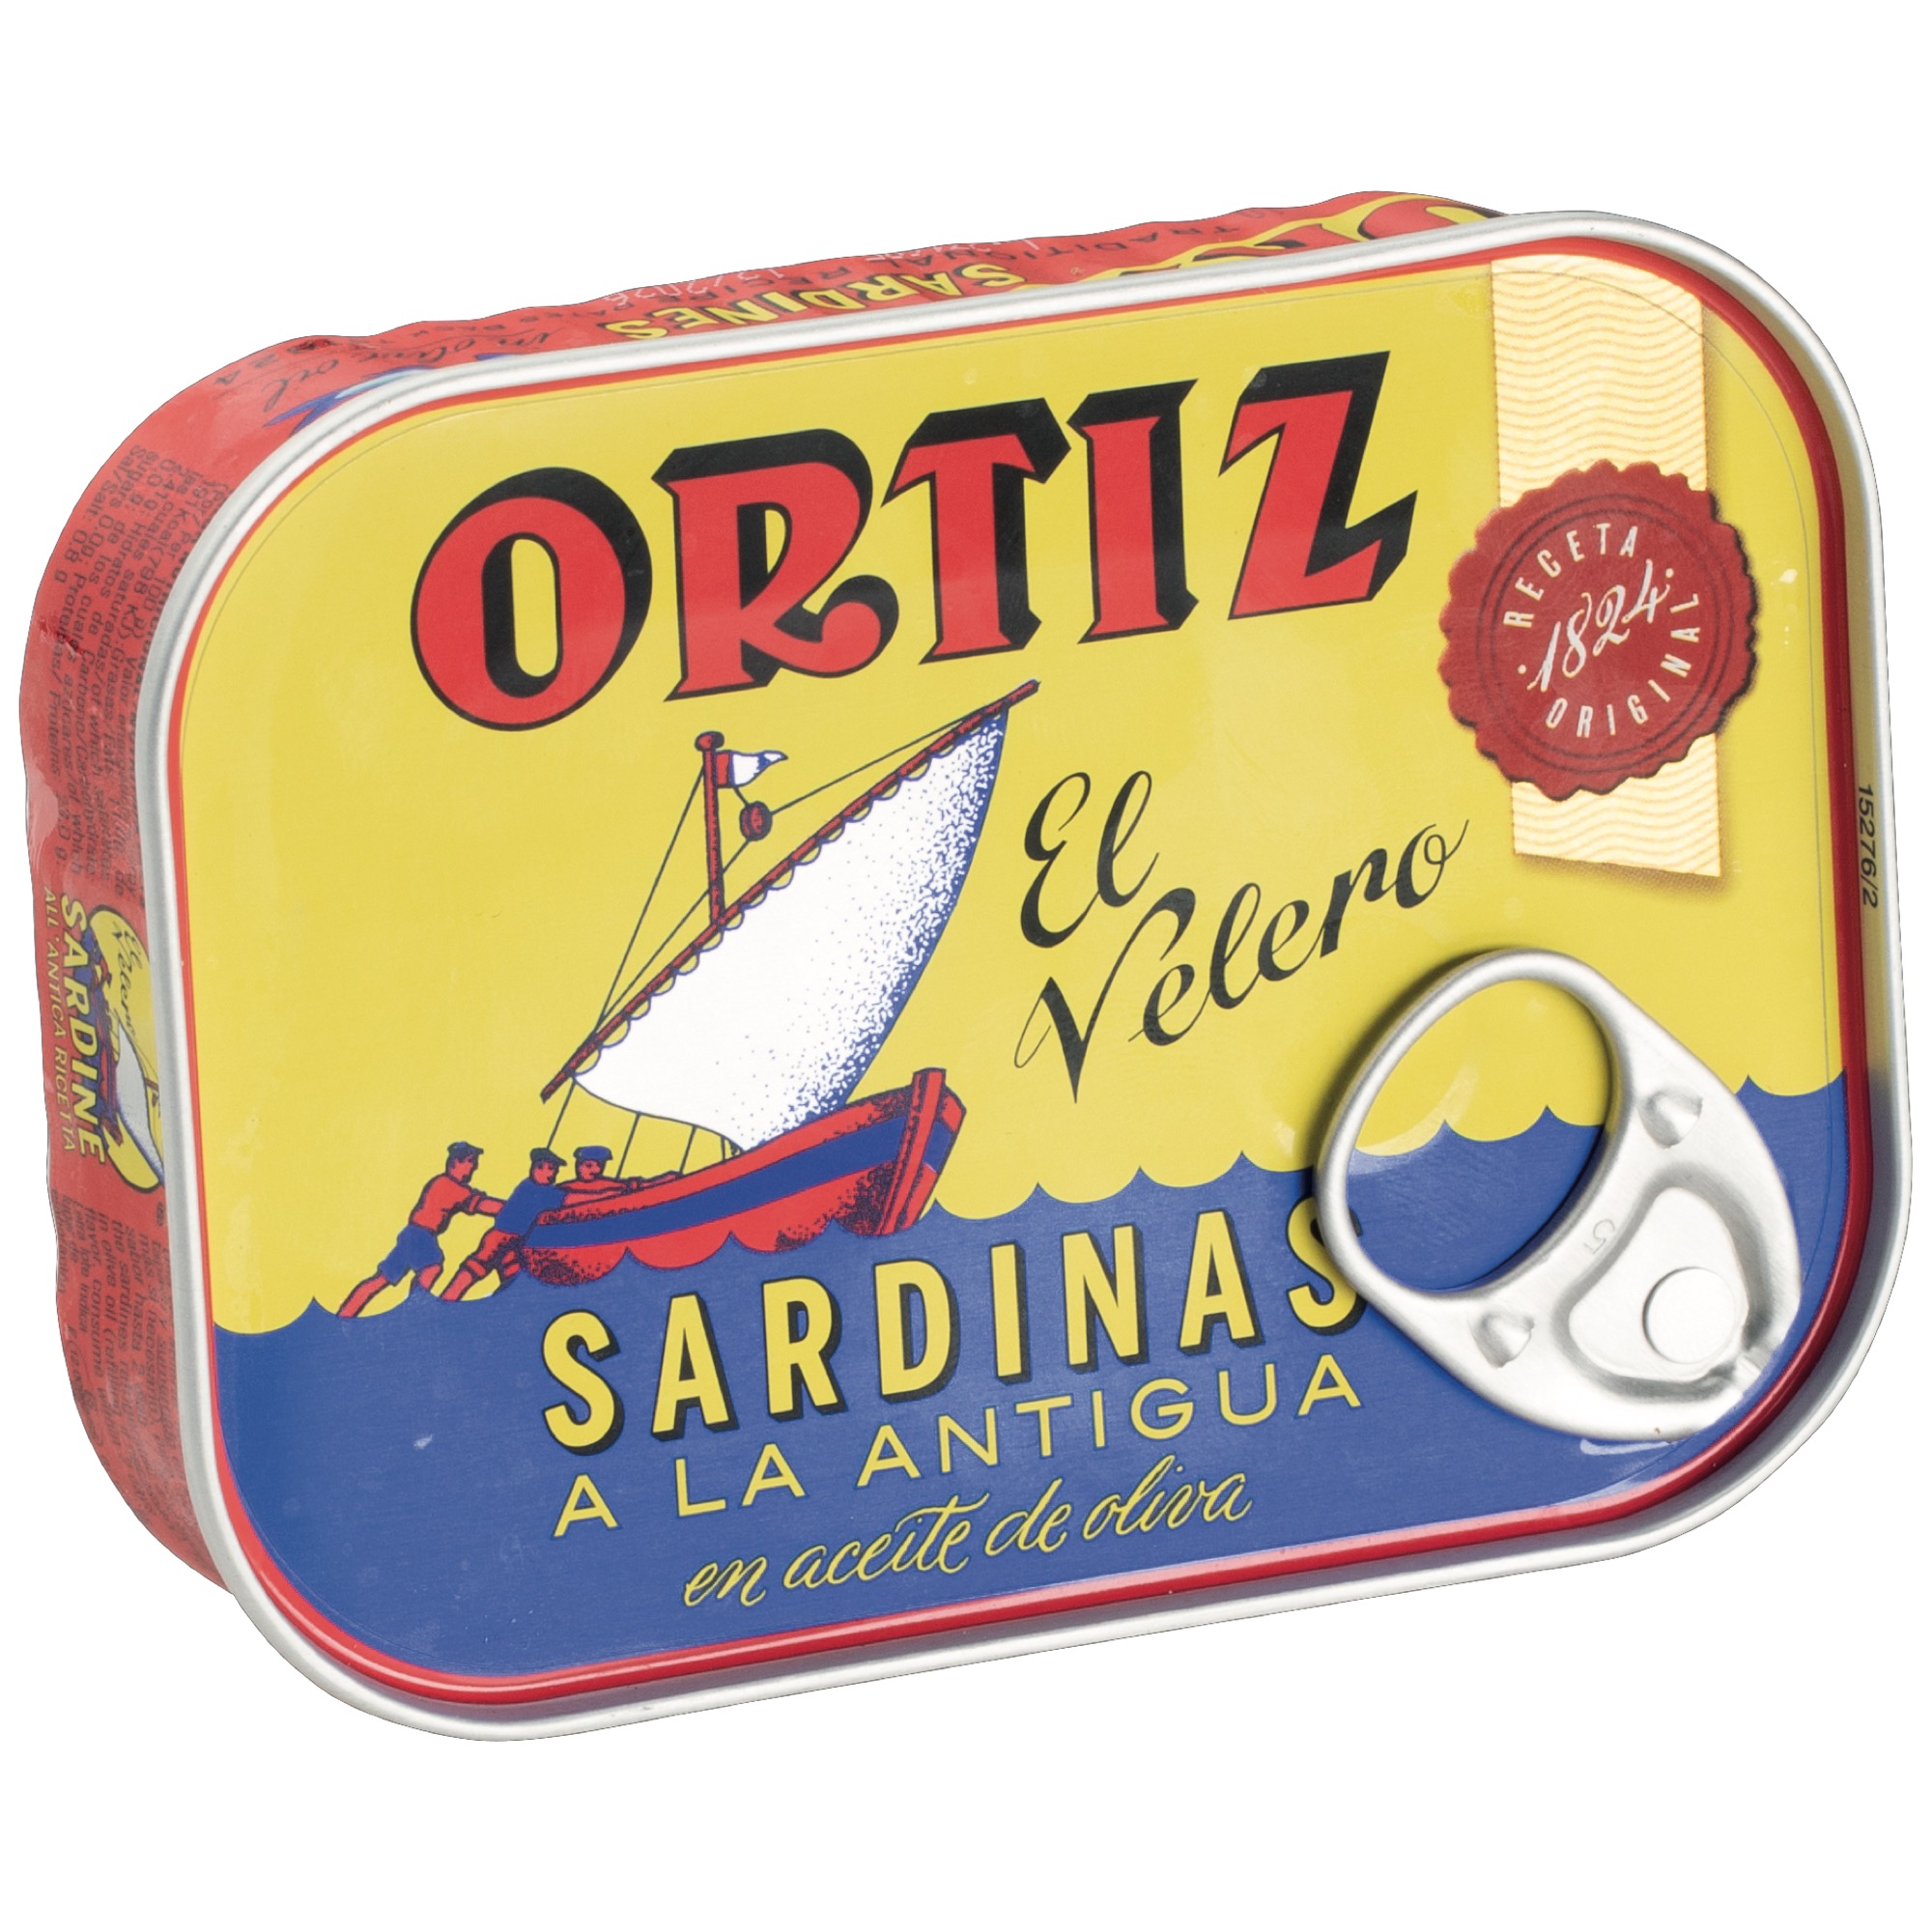 Ortiz sardinky v olivovom oleji 140g